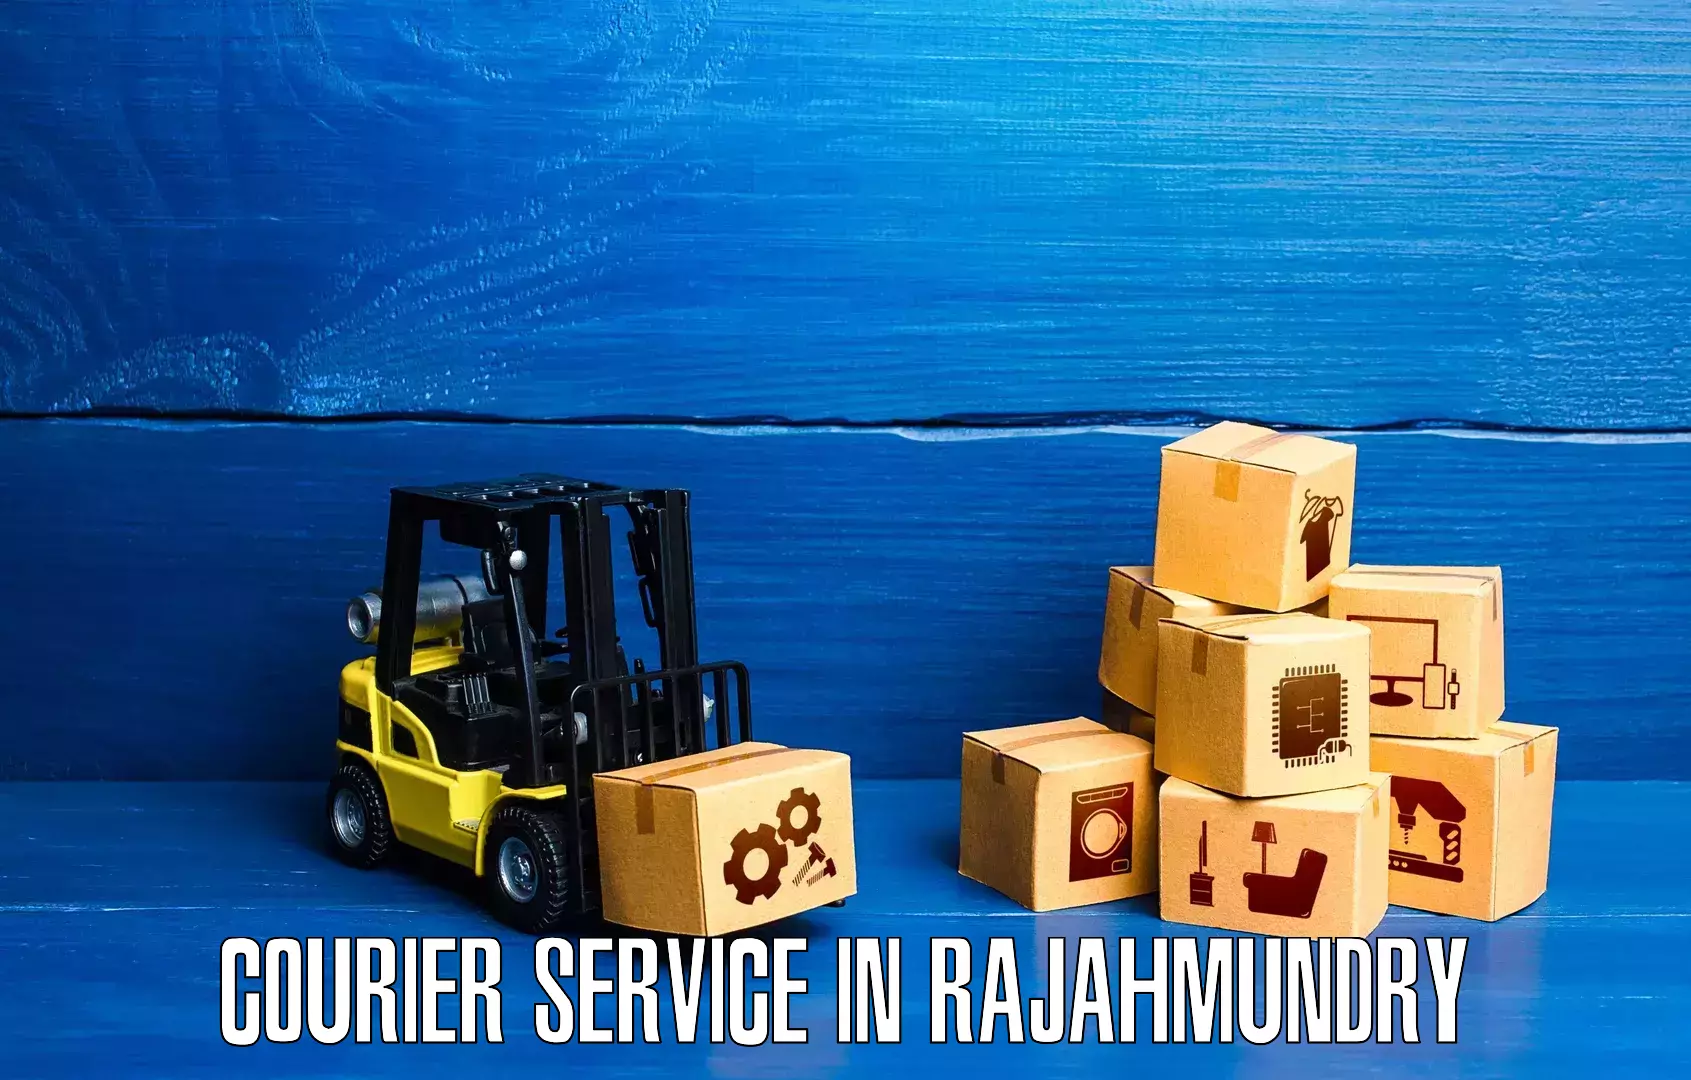 Enhanced shipping experience in Rajahmundry